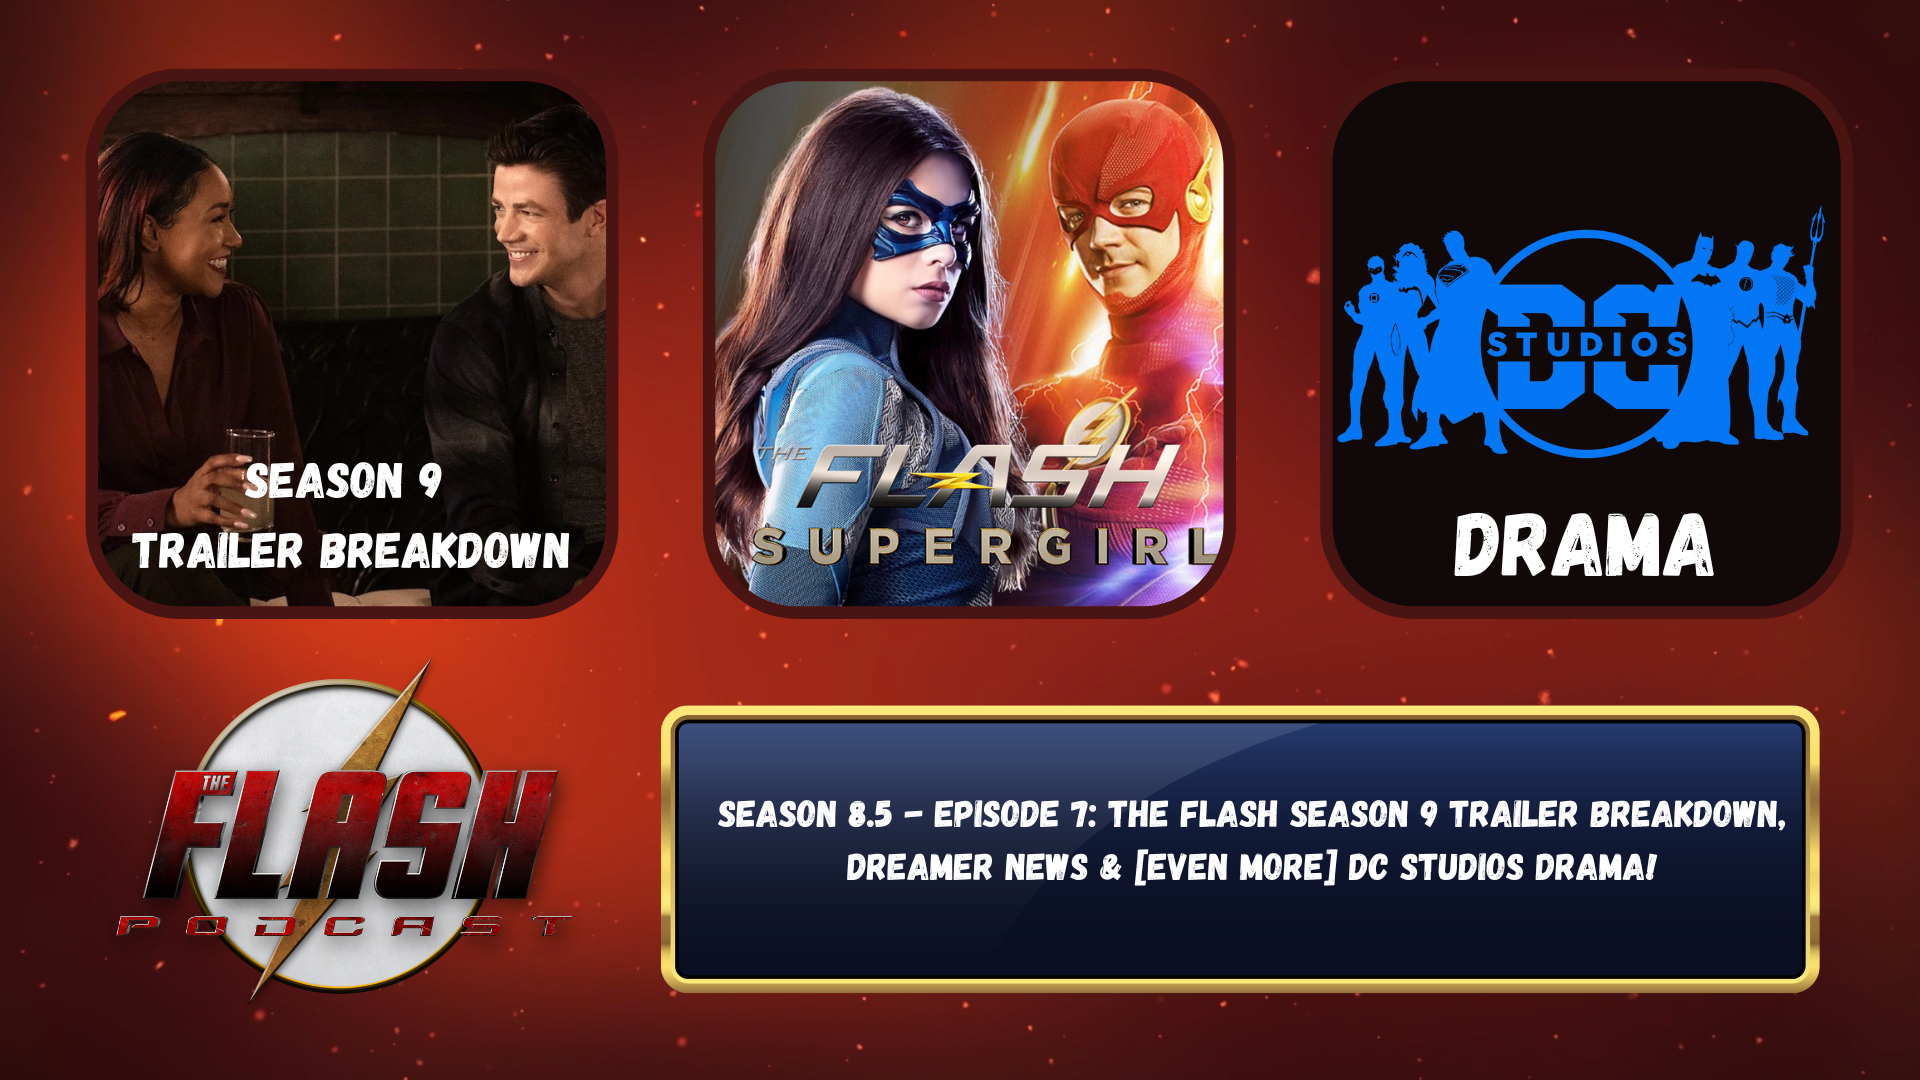 The Flash Podcast Season 8.5 - Episode 7